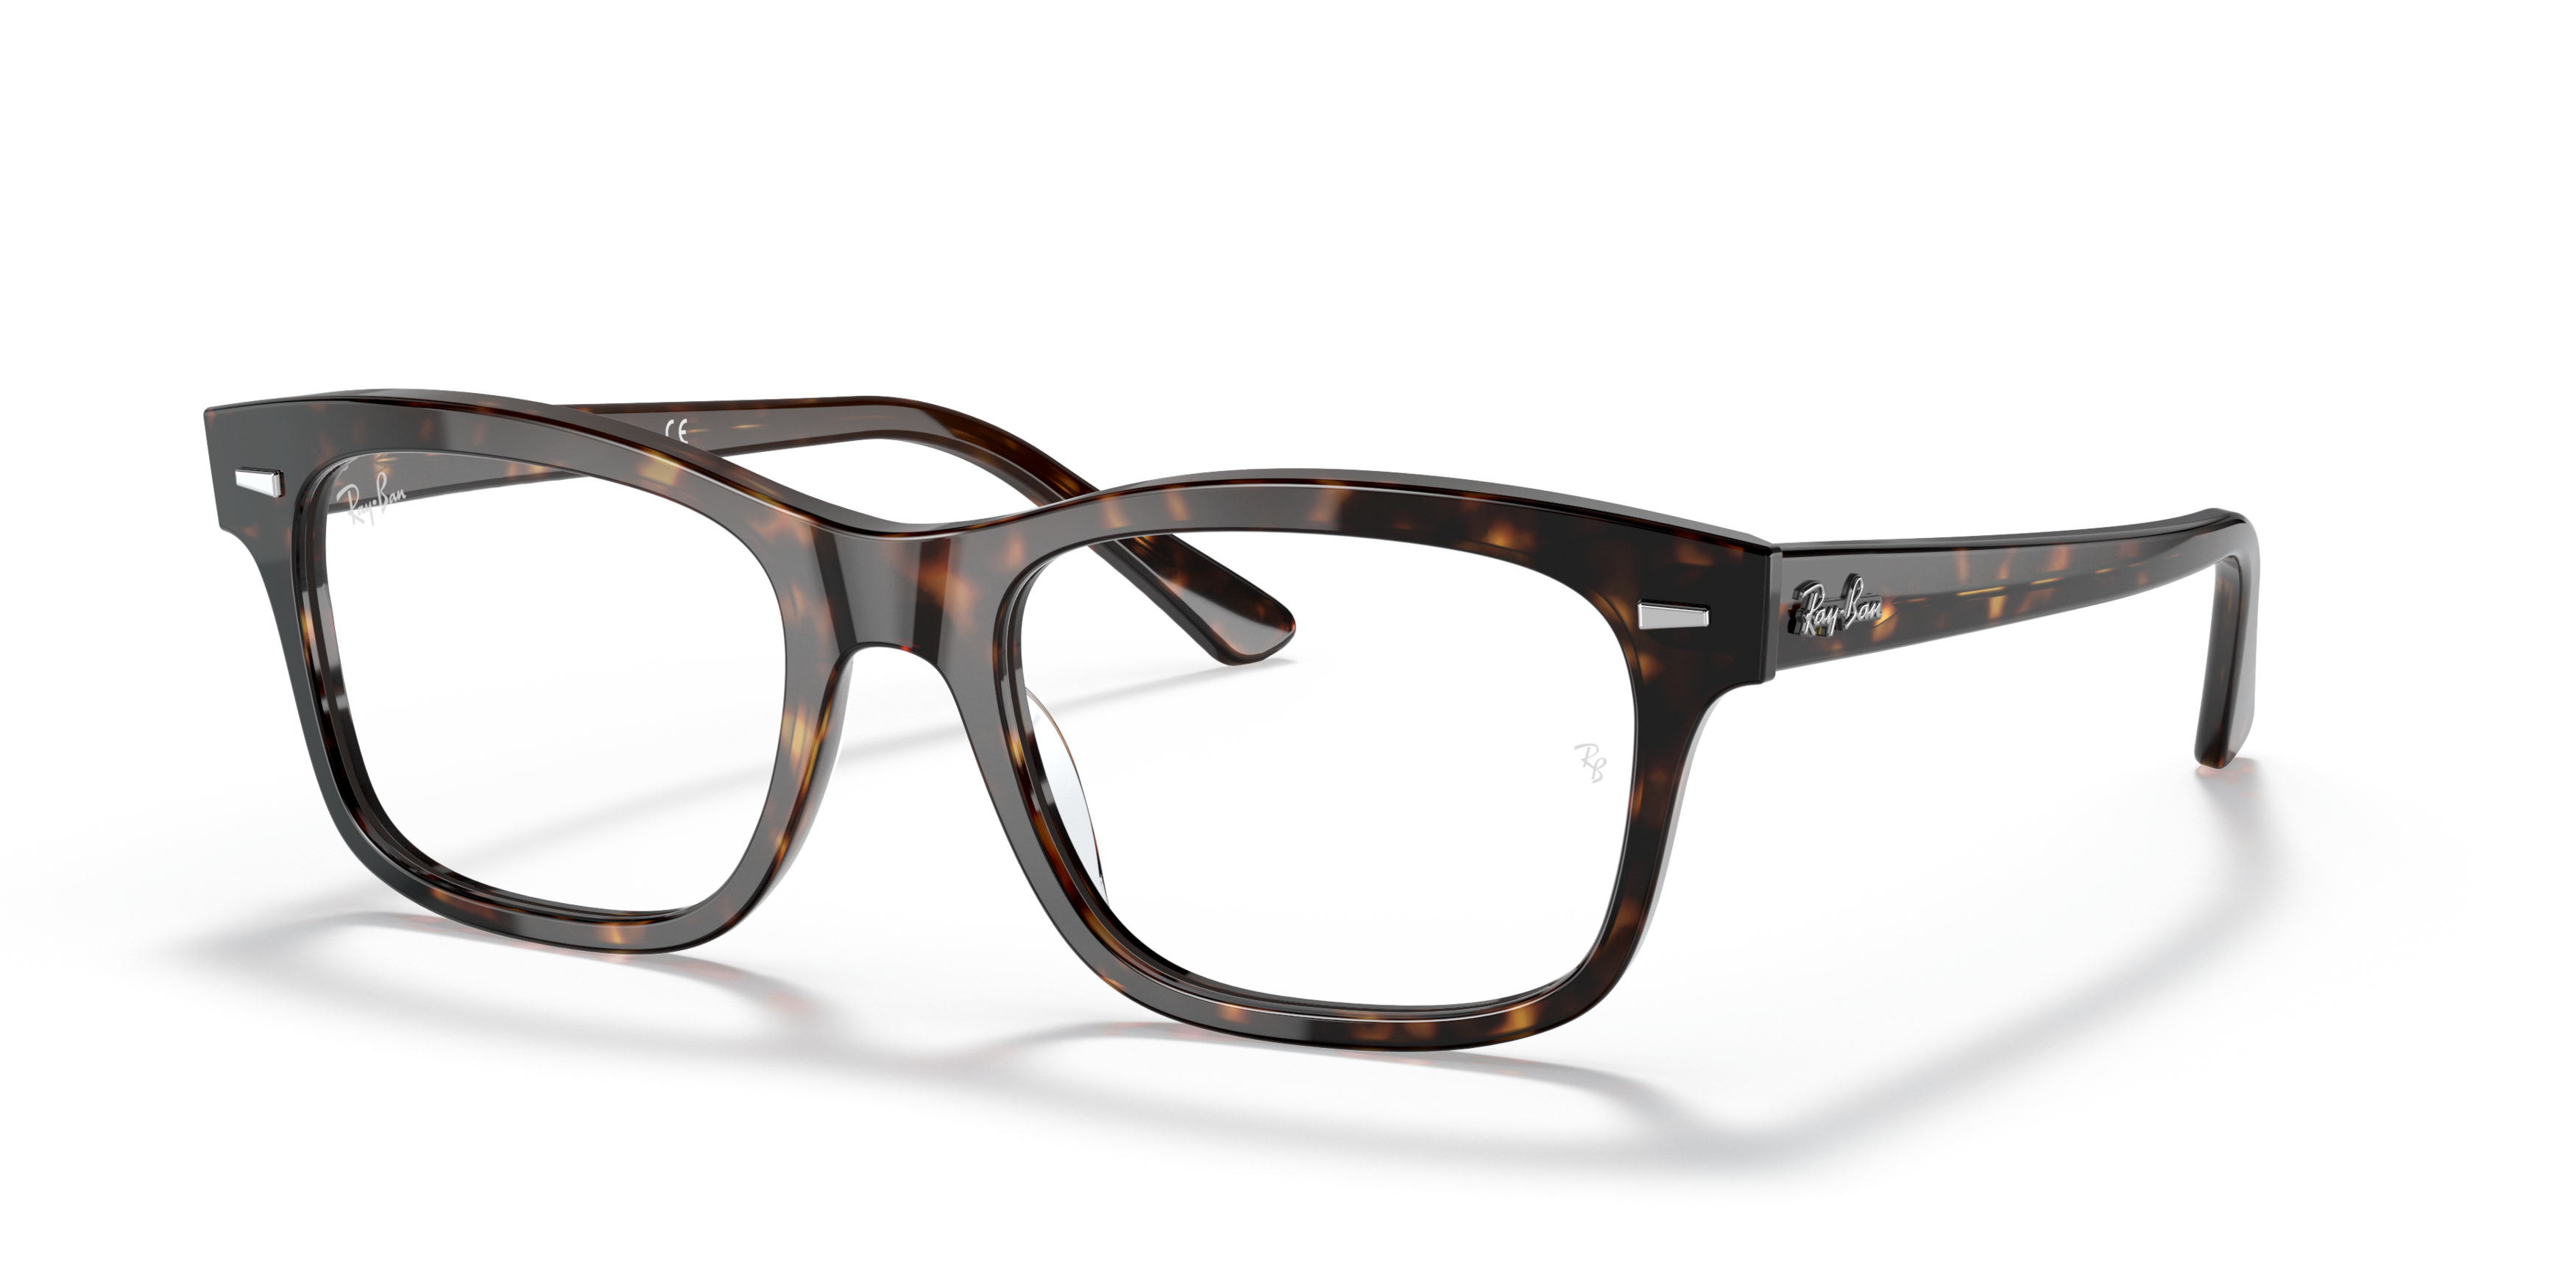 Angle_Left01 Ray-Ban Mr Burbank RX 5383 (2012) Glasses Transparent / Tortoise Shell